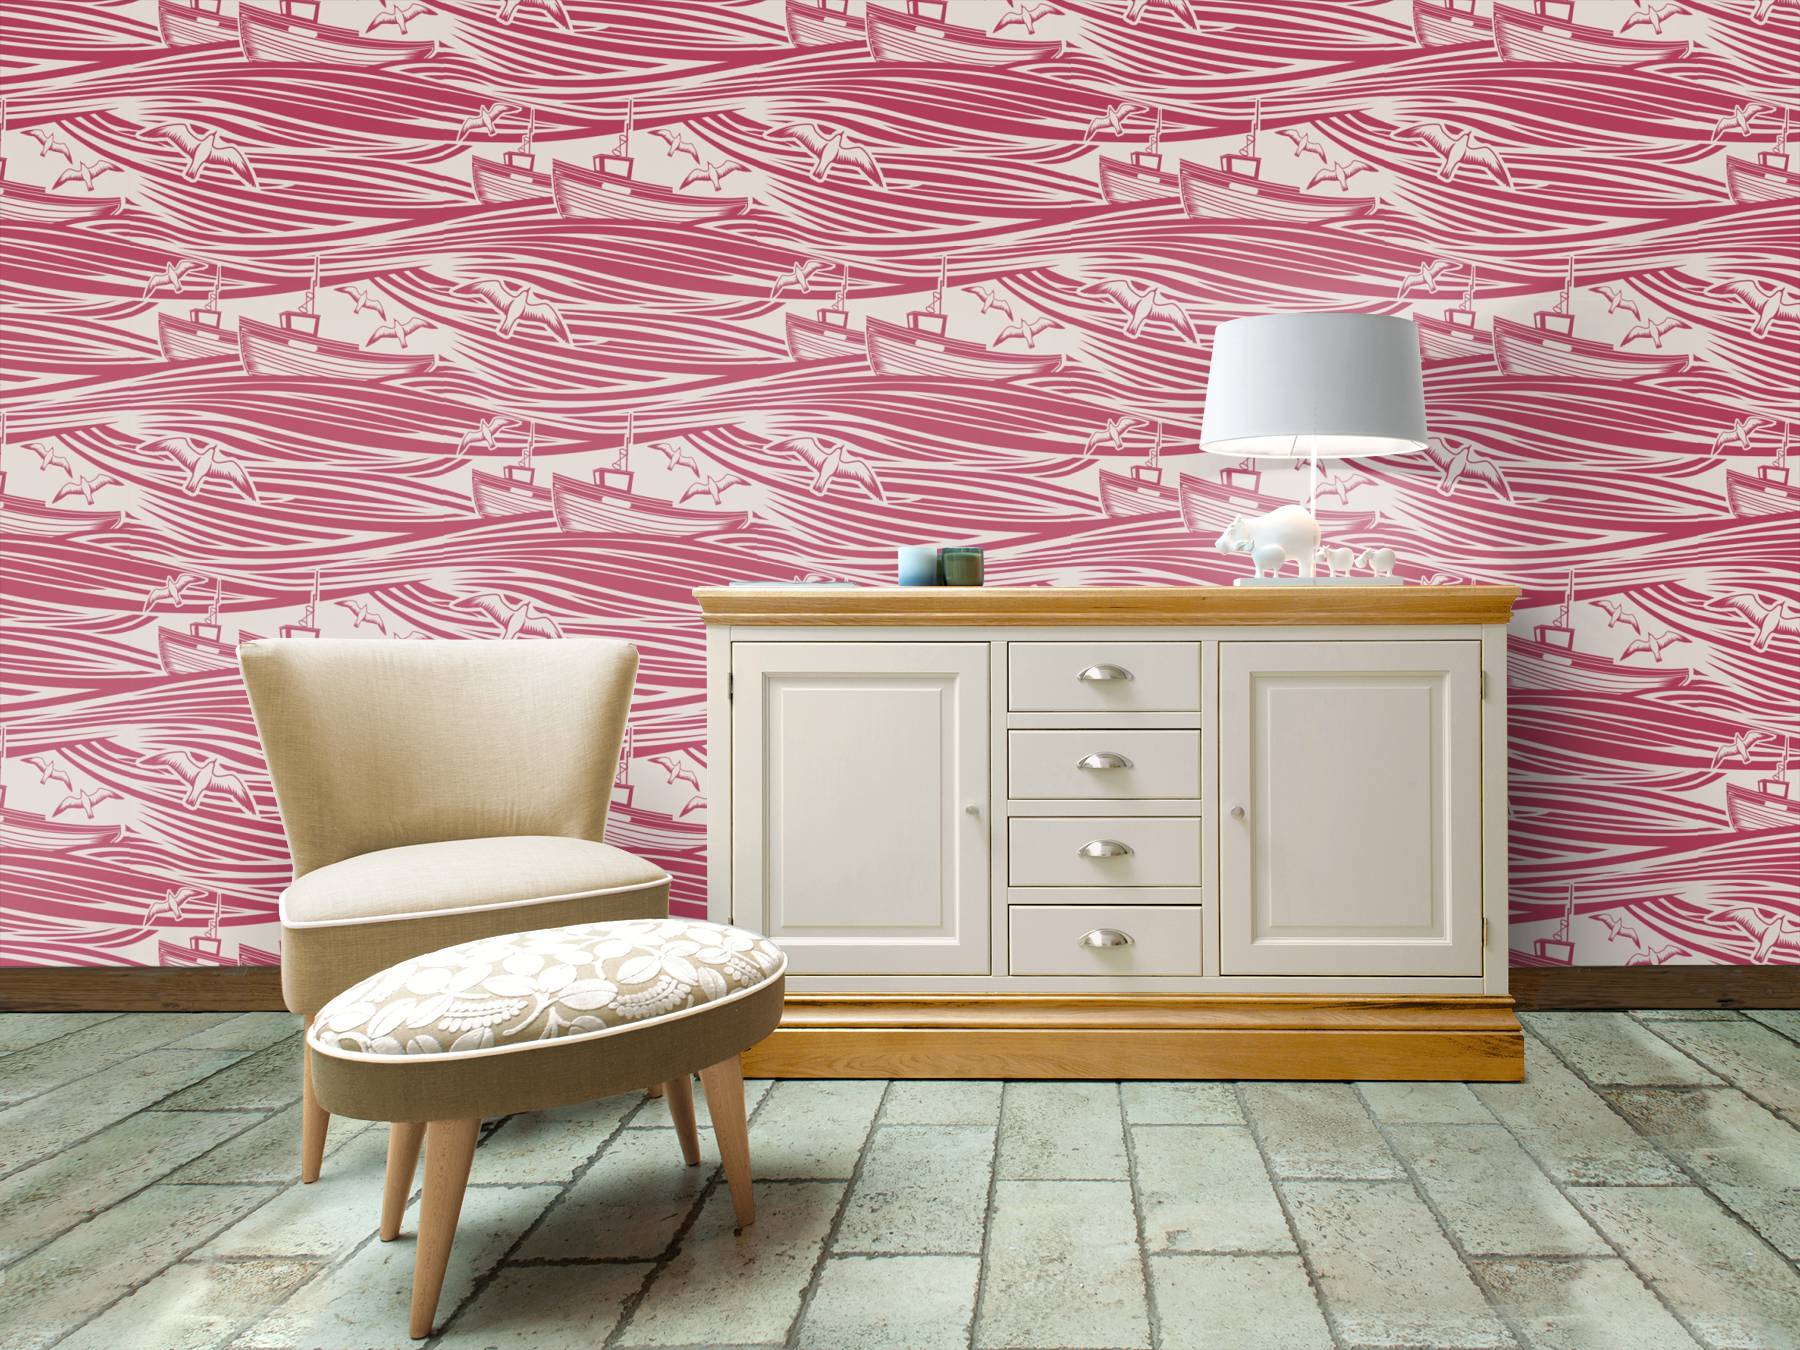 Whitby Roomset Image Whitby Roomset Image - Cole And Son Camellia , HD Wallpaper & Backgrounds